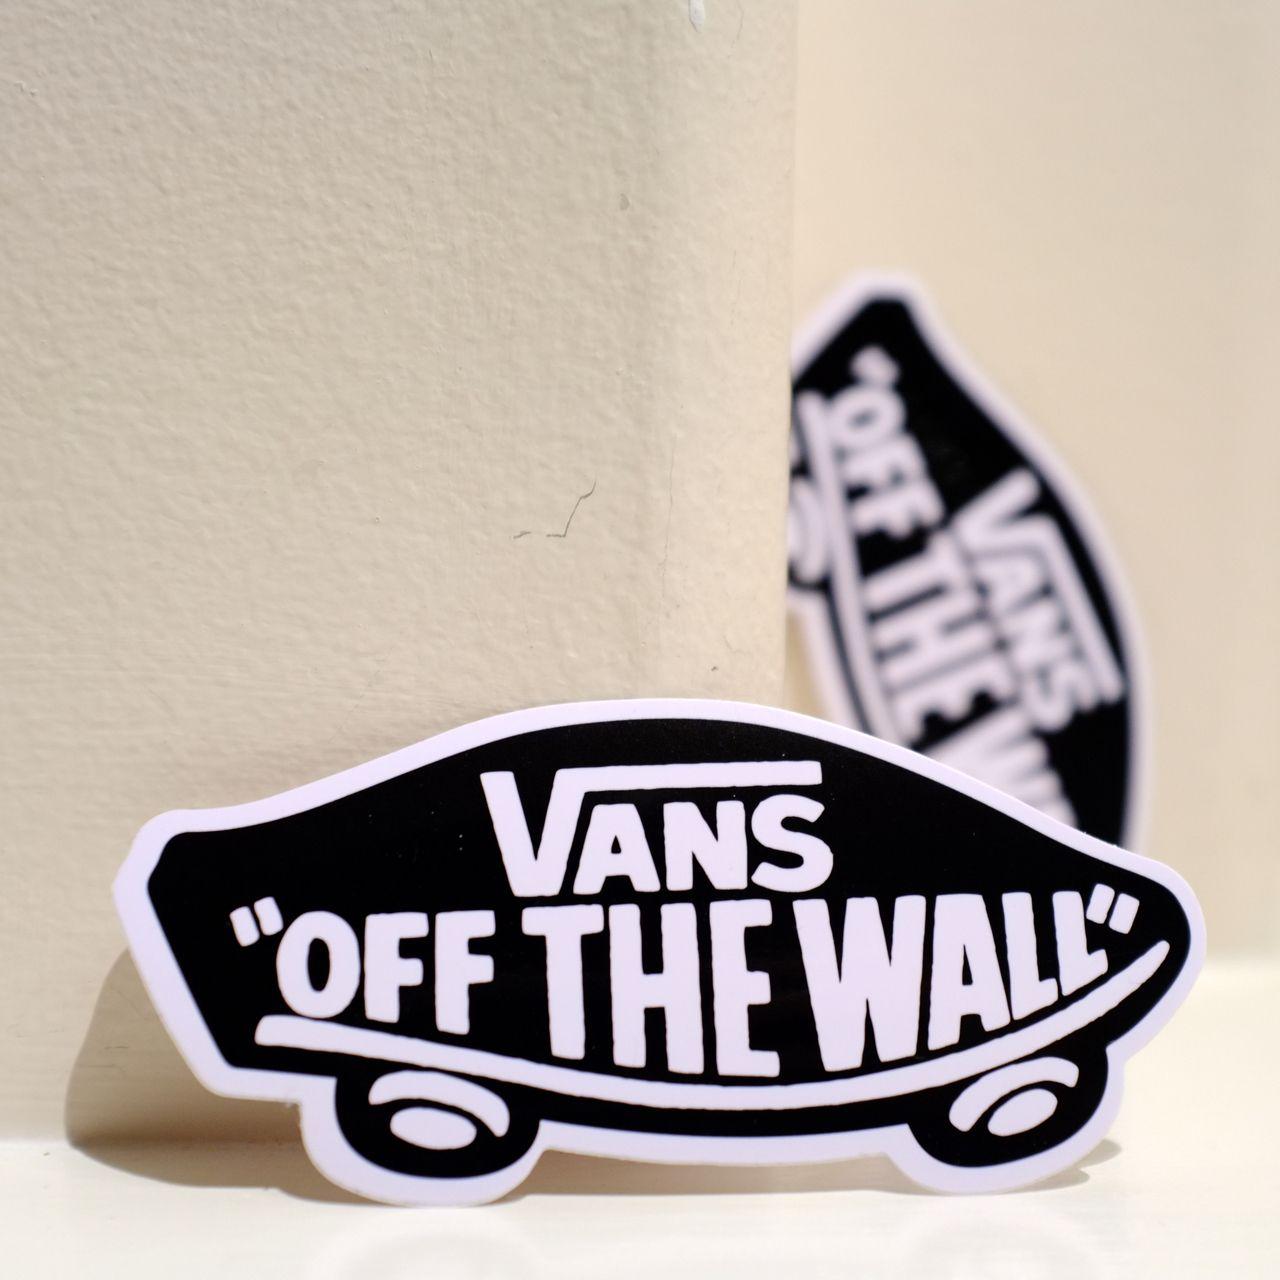 Vans Wall Logo - 4834 Black VANS OFF THE WALL Logo Shop Display 4x2